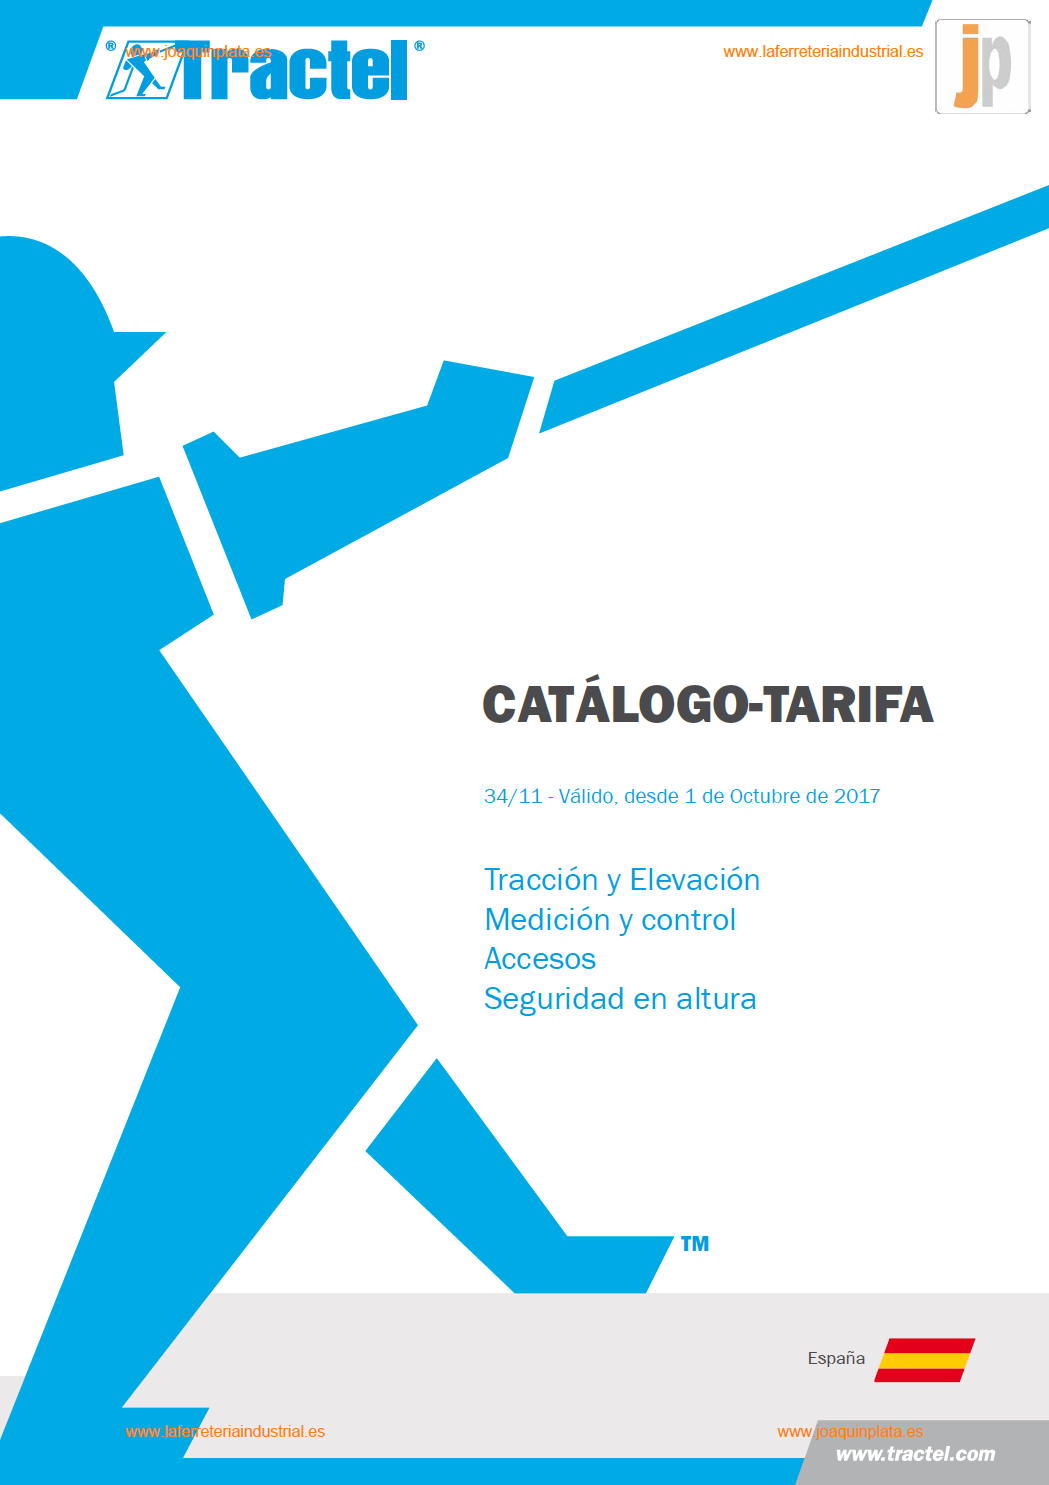 Tractel Catálogo Tarifa 2017